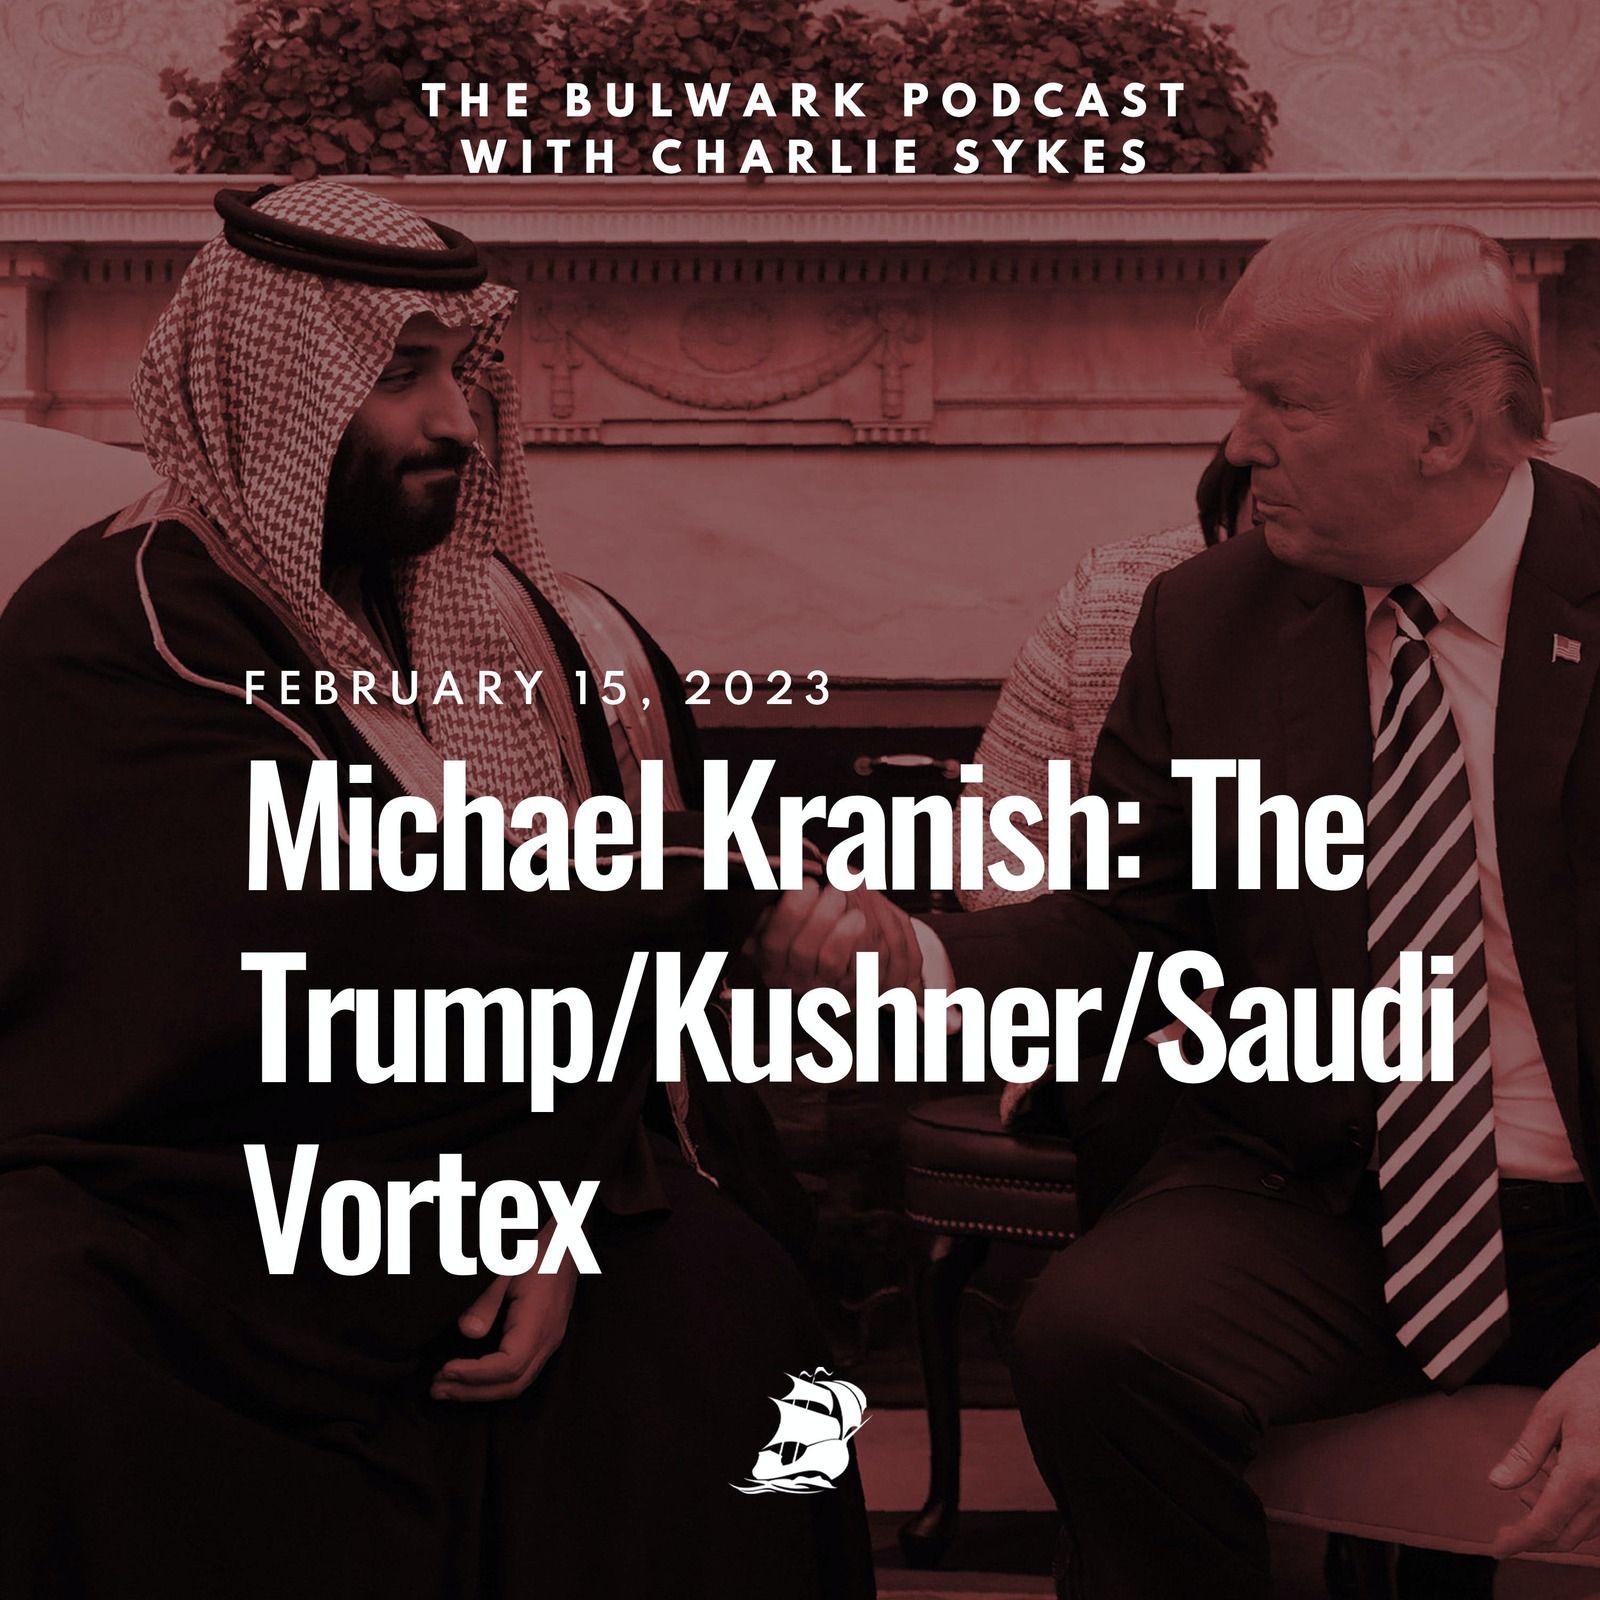 Michael Kranish: The Trump/Kushner/Saudi Vortex by The Bulwark Podcast